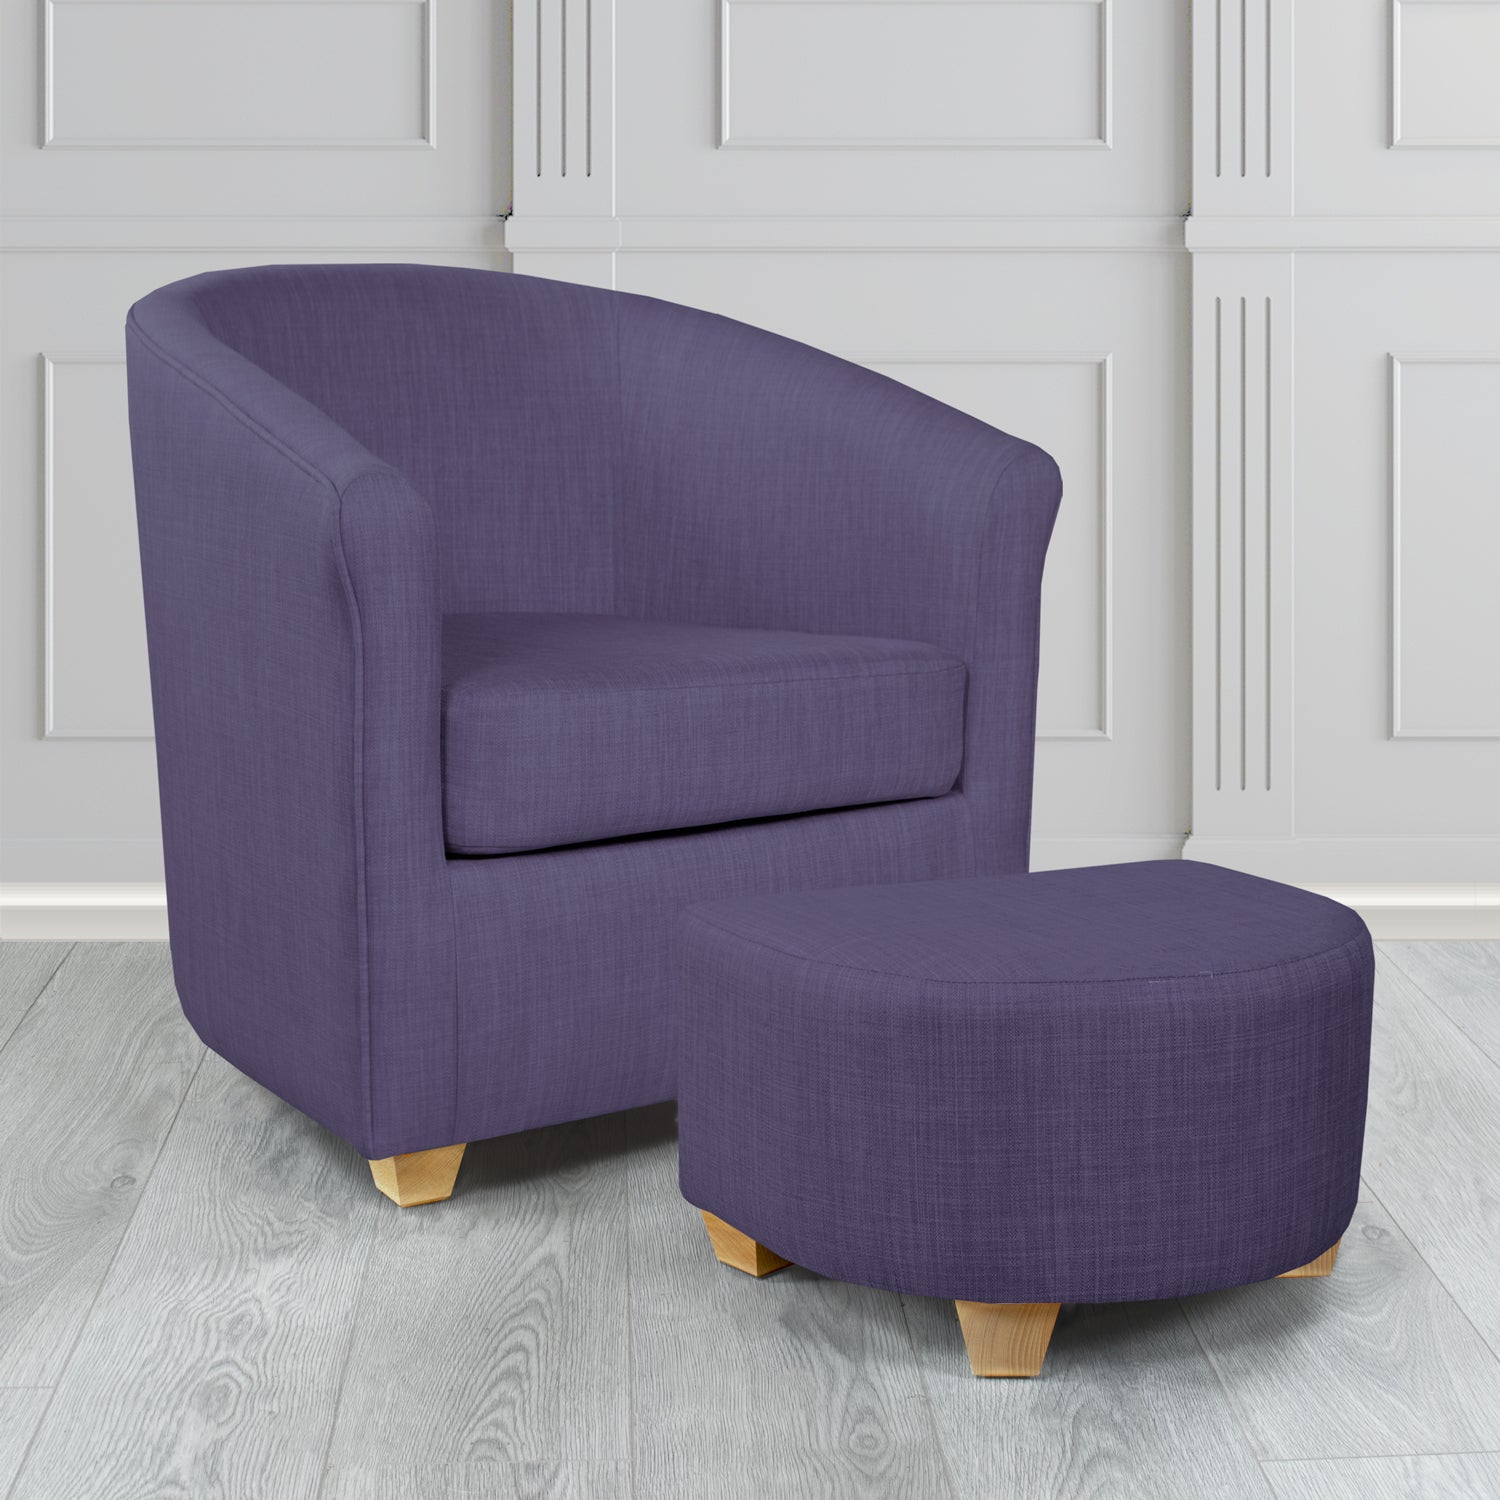 Cannes Charles Purple Plain Linen Fabric Tub Chair & Footstool Set - The Tub Chair Shop